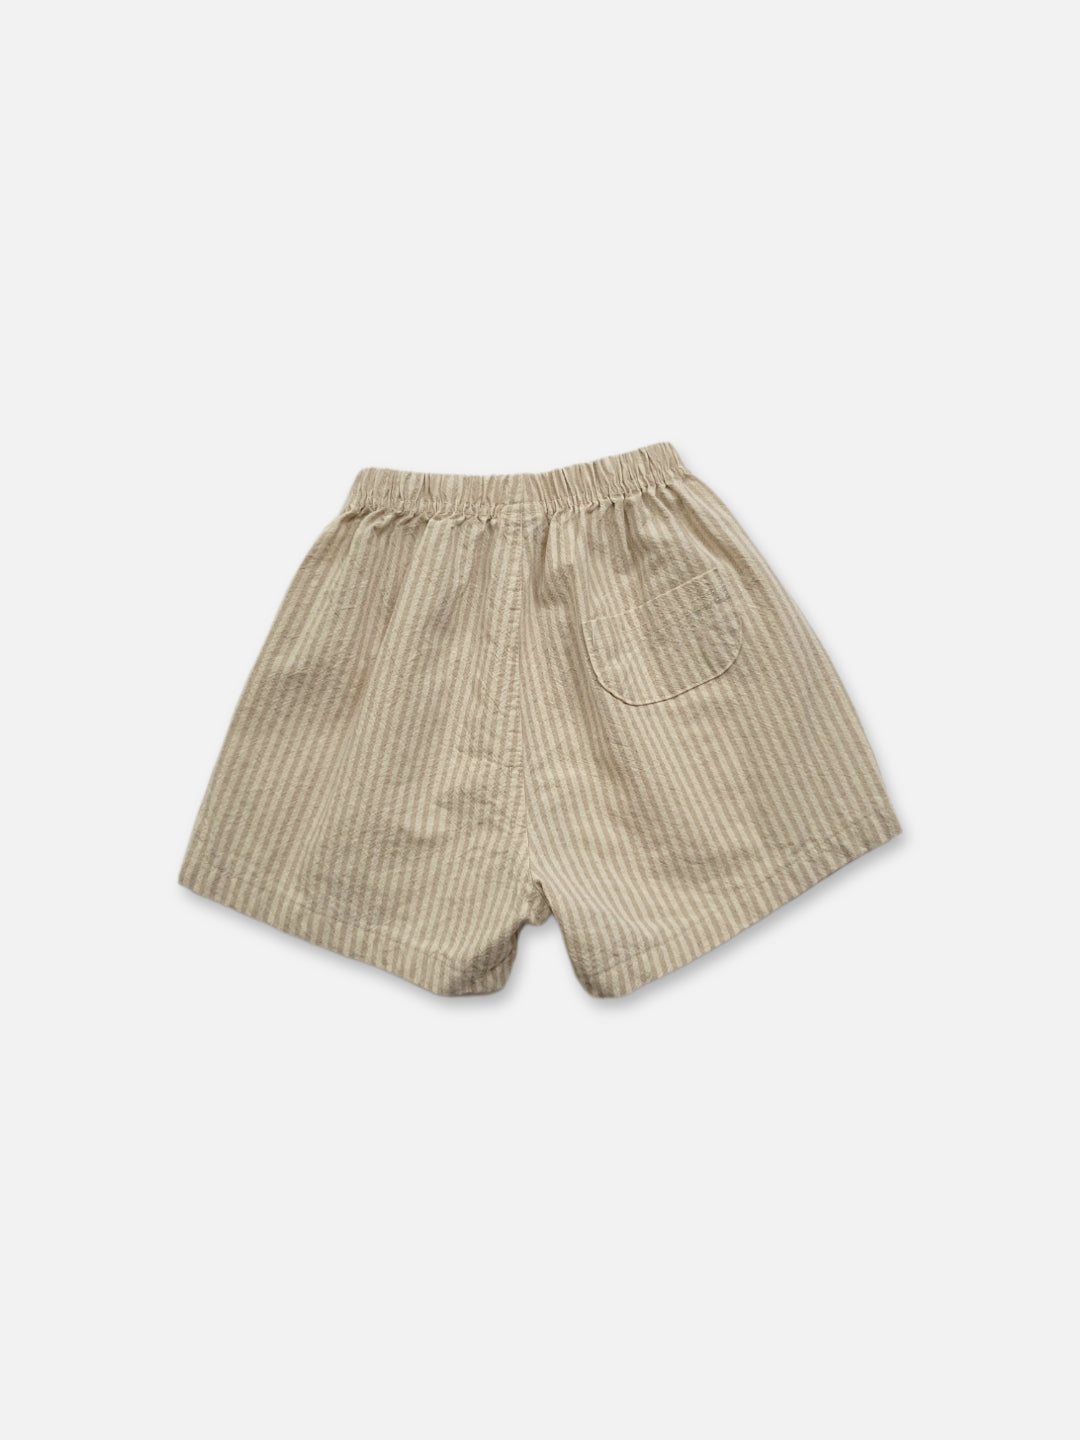 Luna Shorts | Stripe on Beige